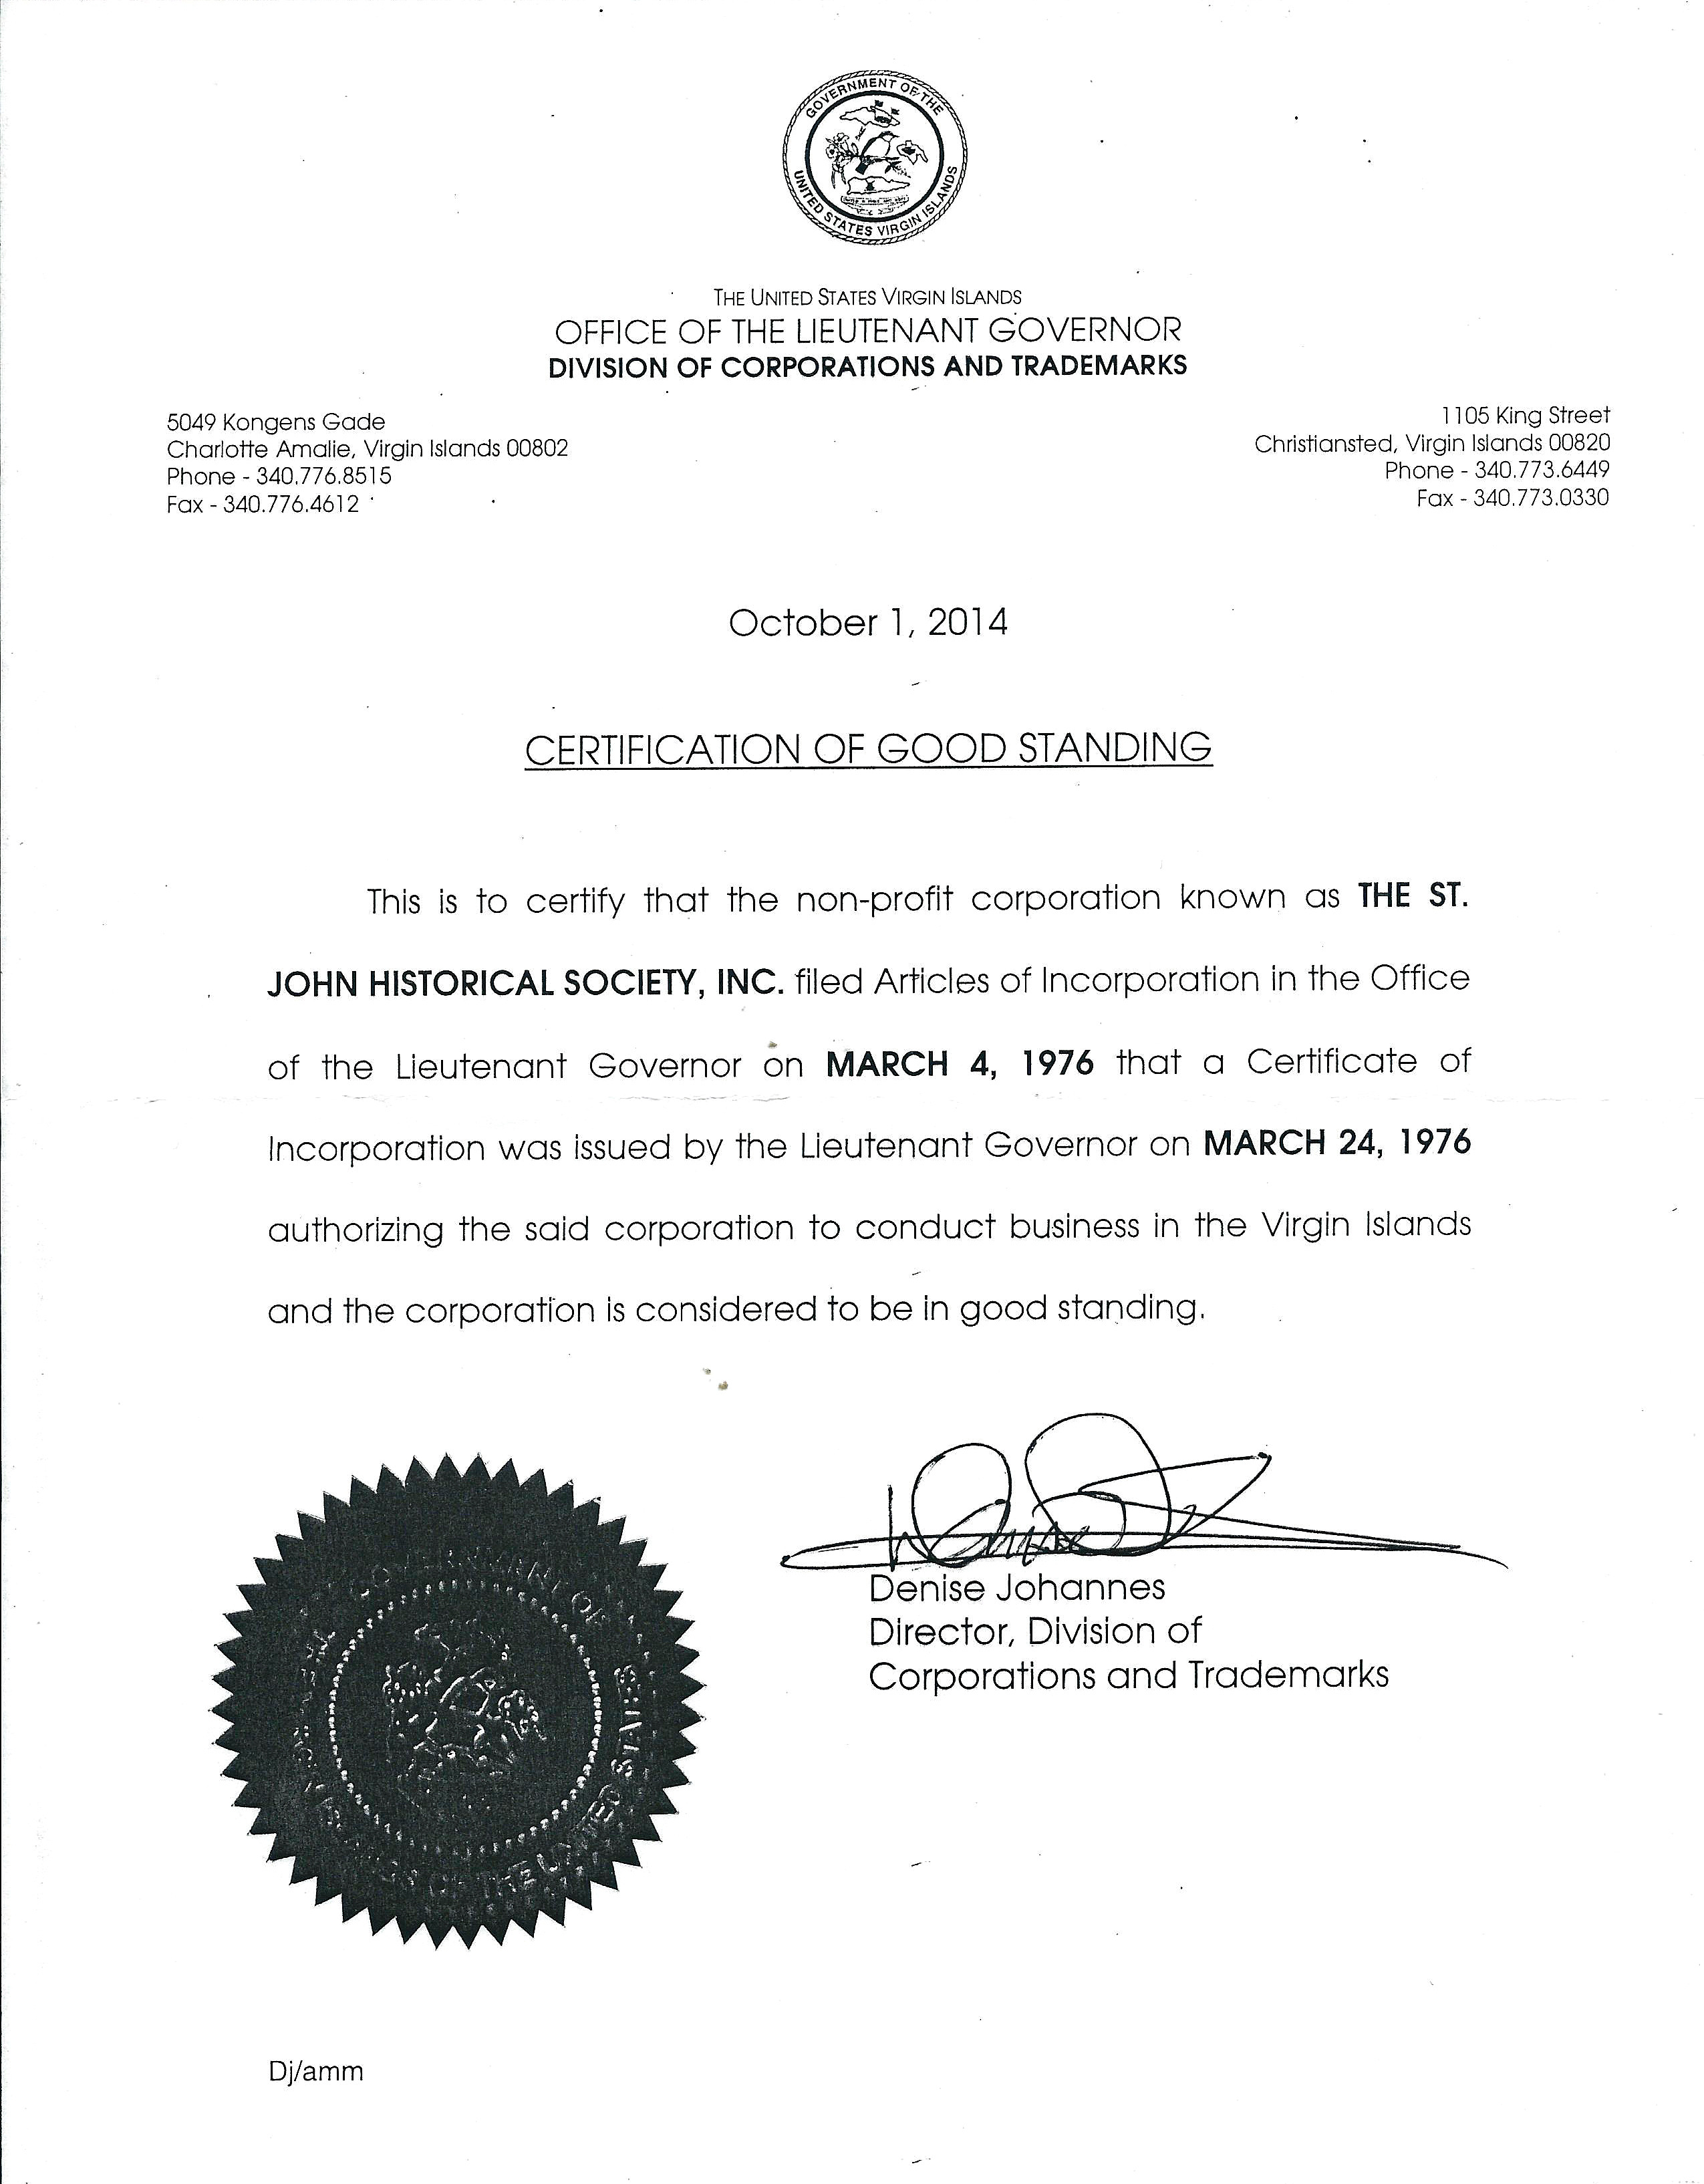 Certificate of Good Standing Oct. 1, 2014 St. John Historical Society